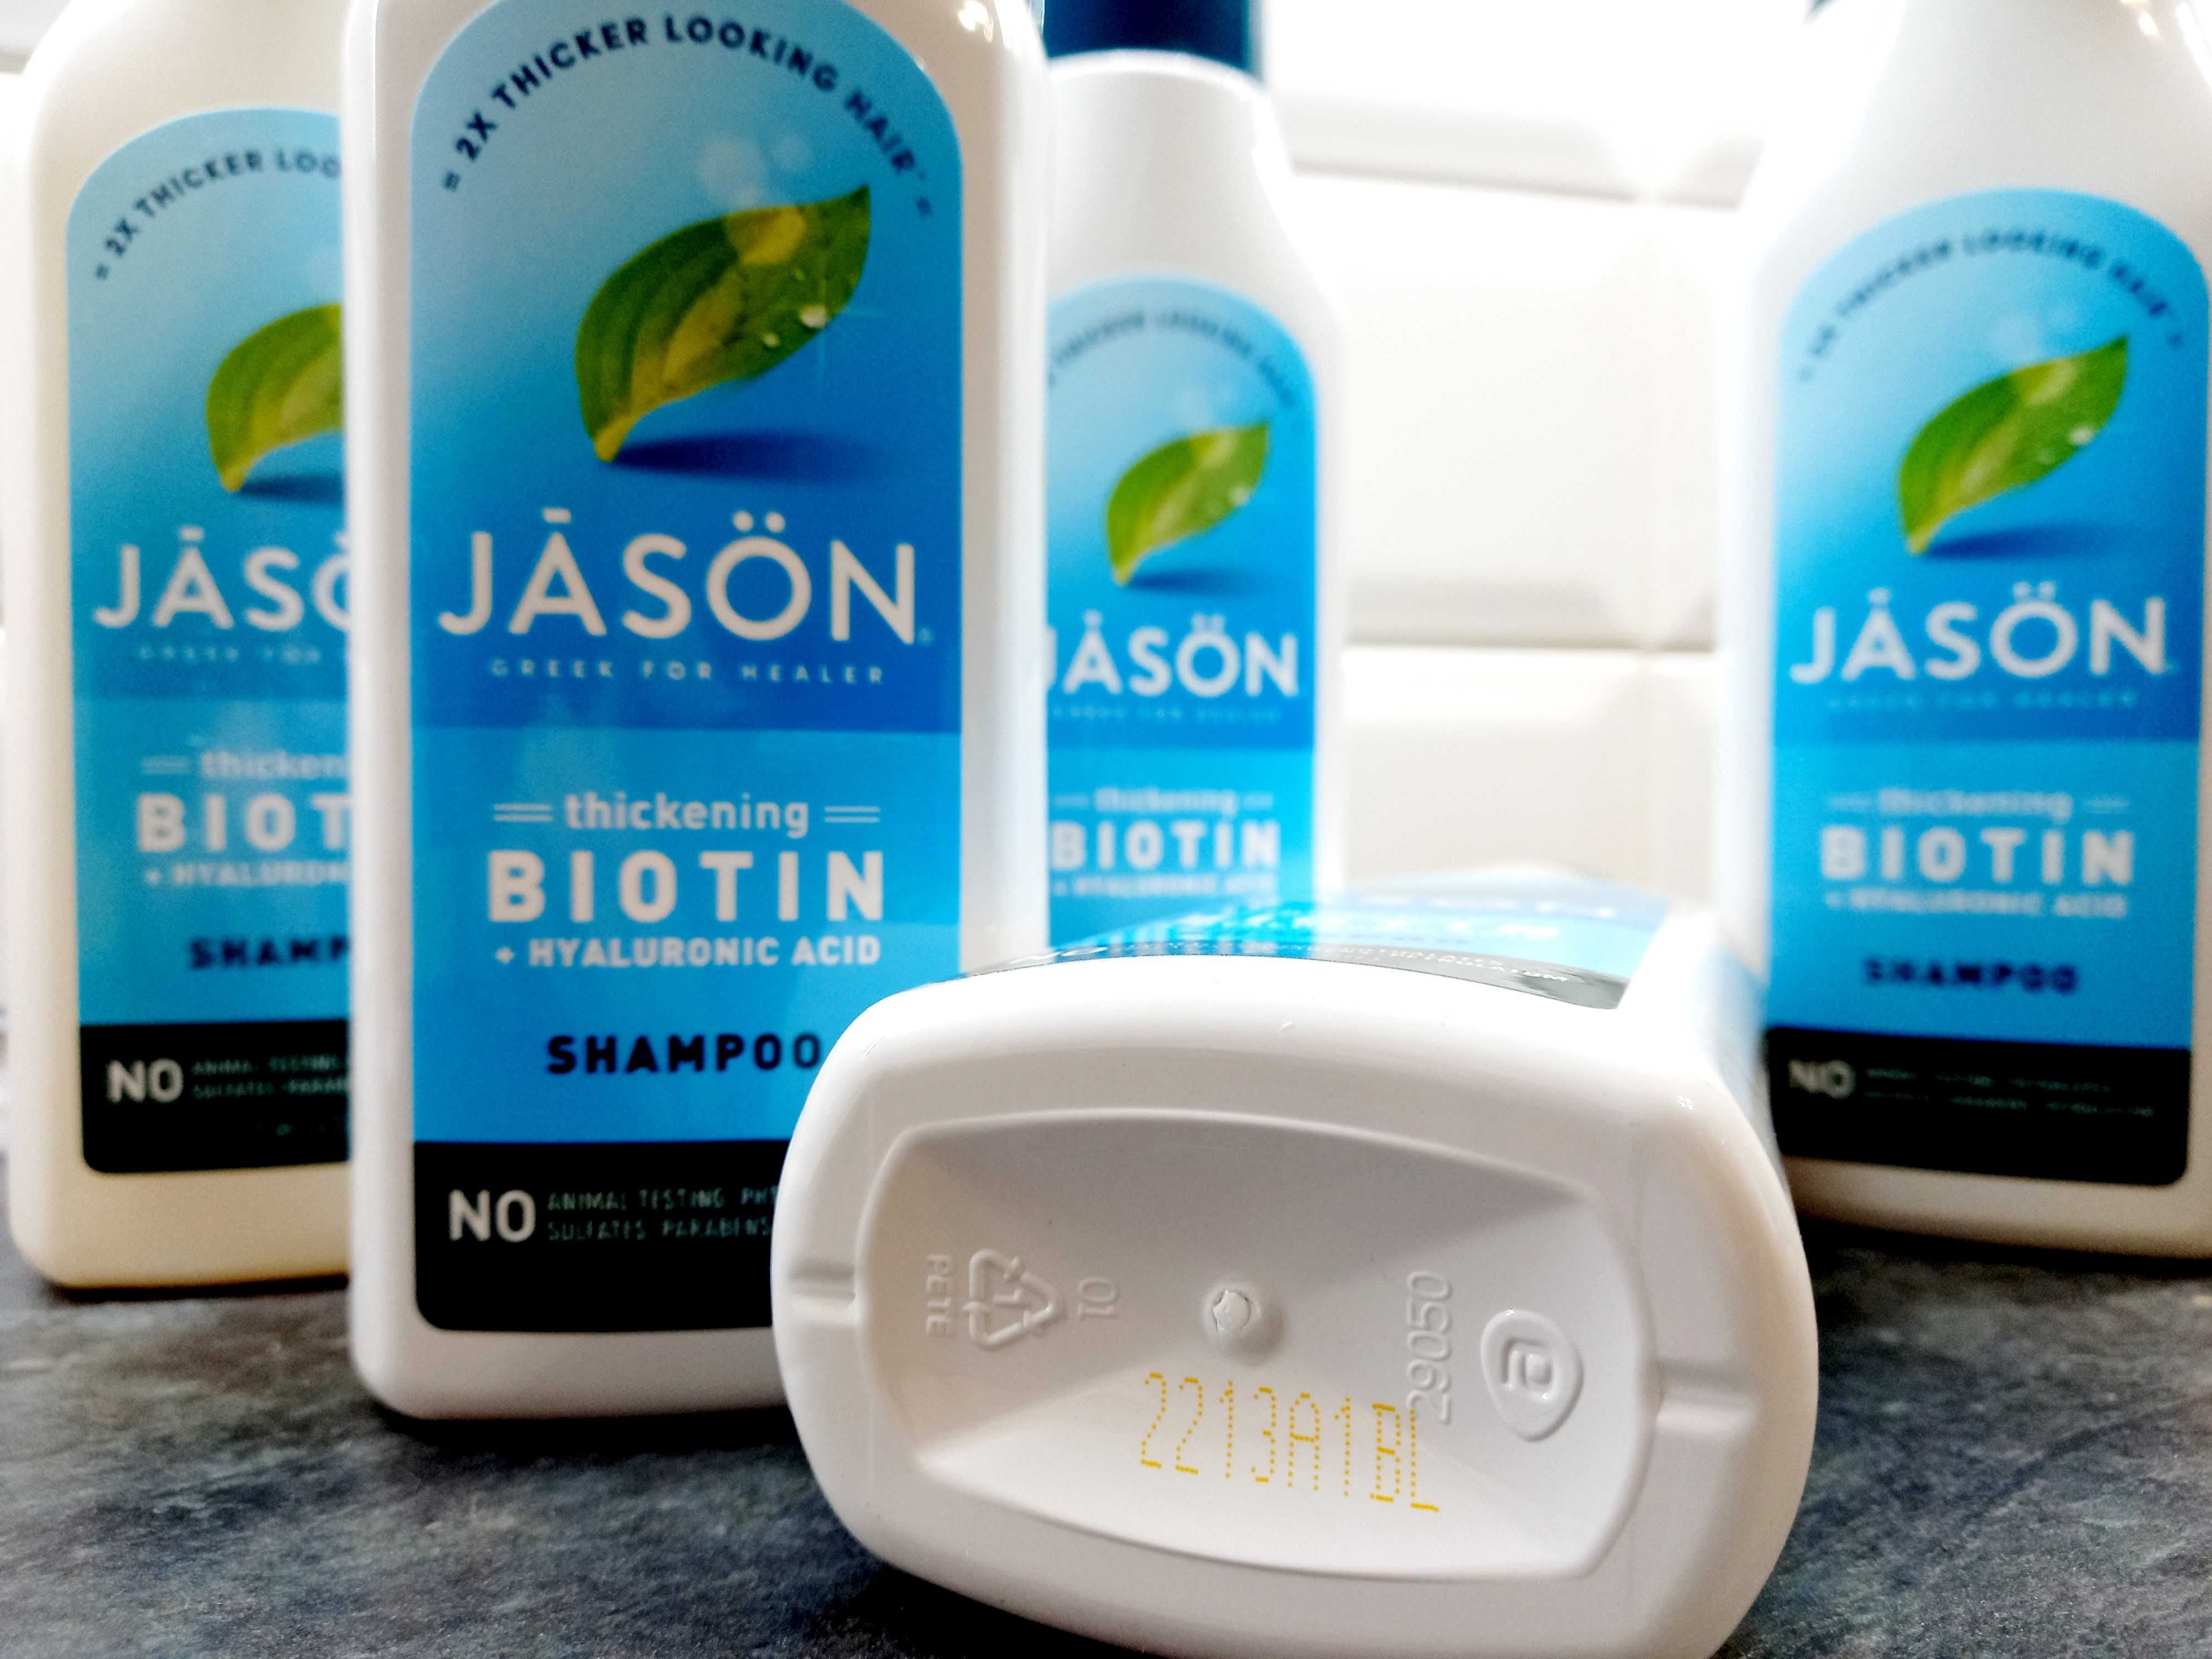 Jason, Shampoo Biotine + Hyaluronic Acid (473 мл), шампунь с биотином